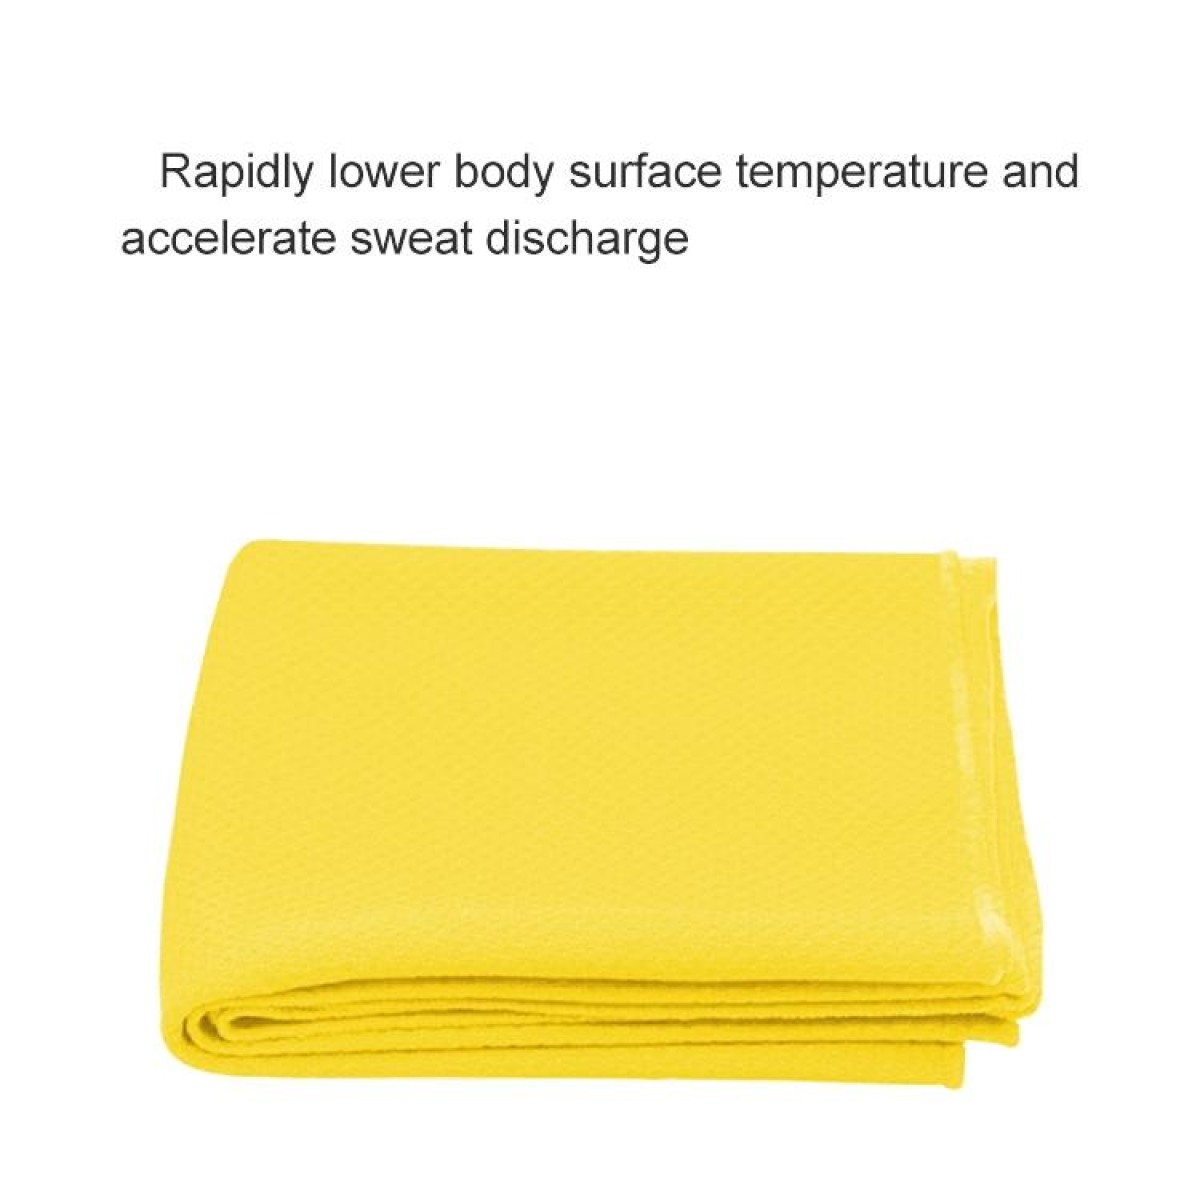 Outdoor Sports Portable Cold Feeling Prevent Heatstroke Ice Towel, Size: 30*80cm(Yellow)